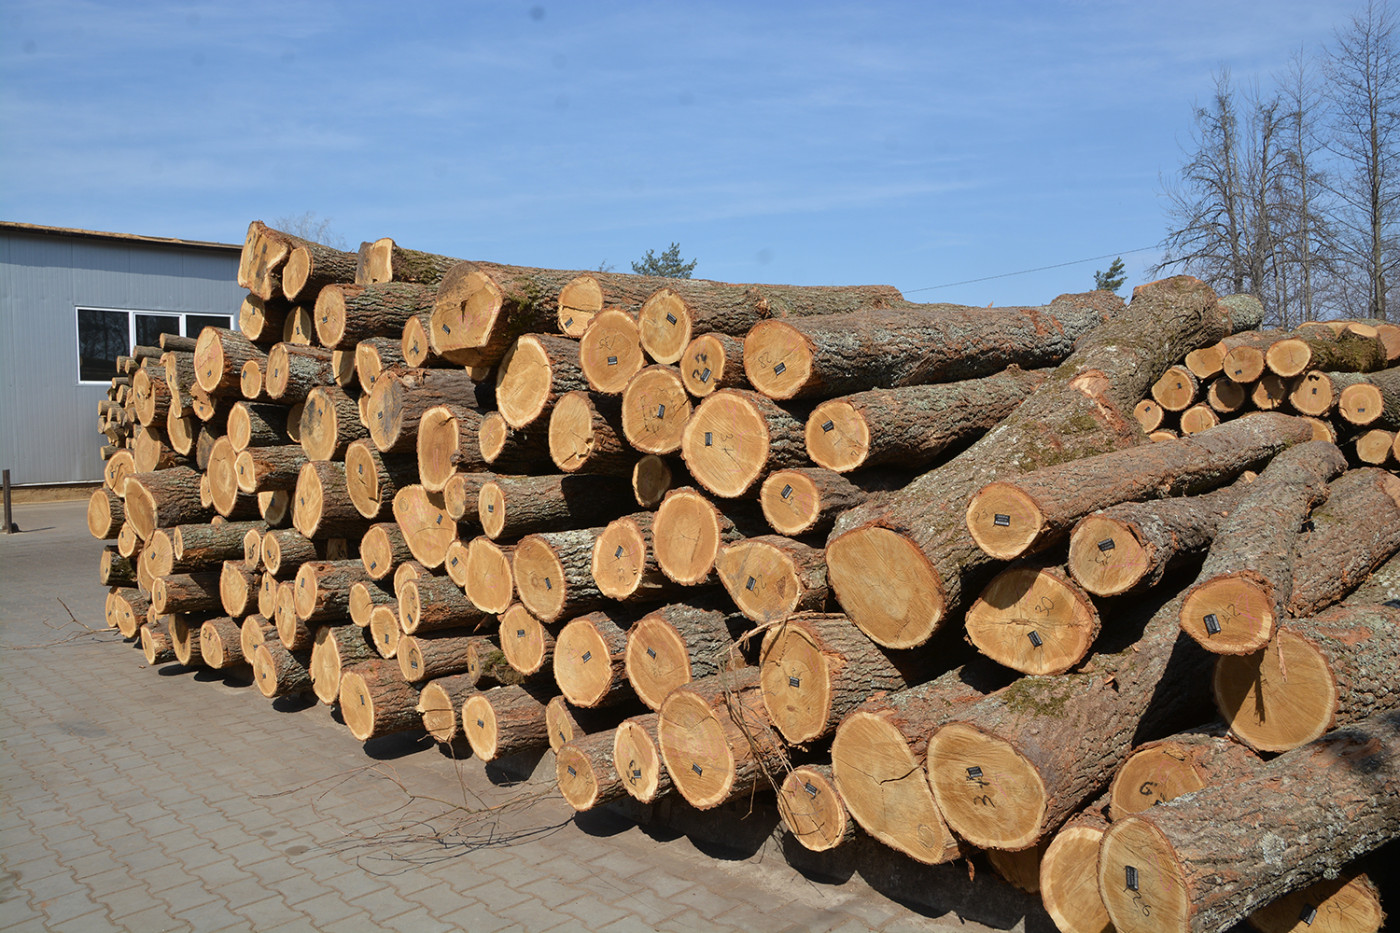 Logging, harvesting of timber